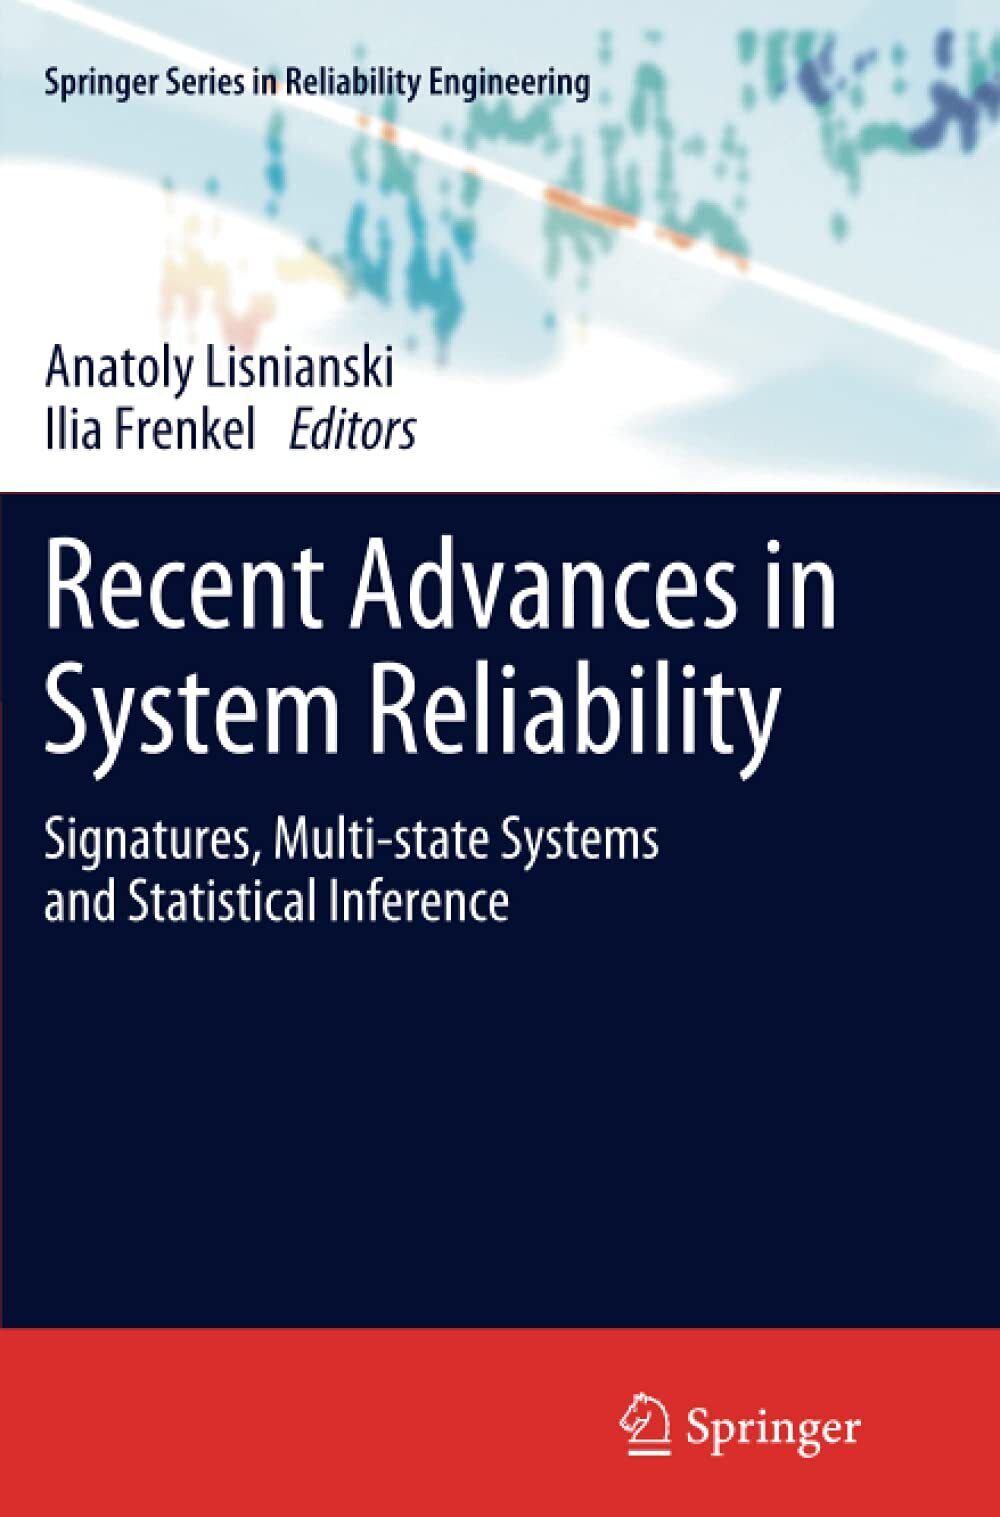 Recent Advances in System Reliability - Anatoly Lisnianski - Springer, 2013